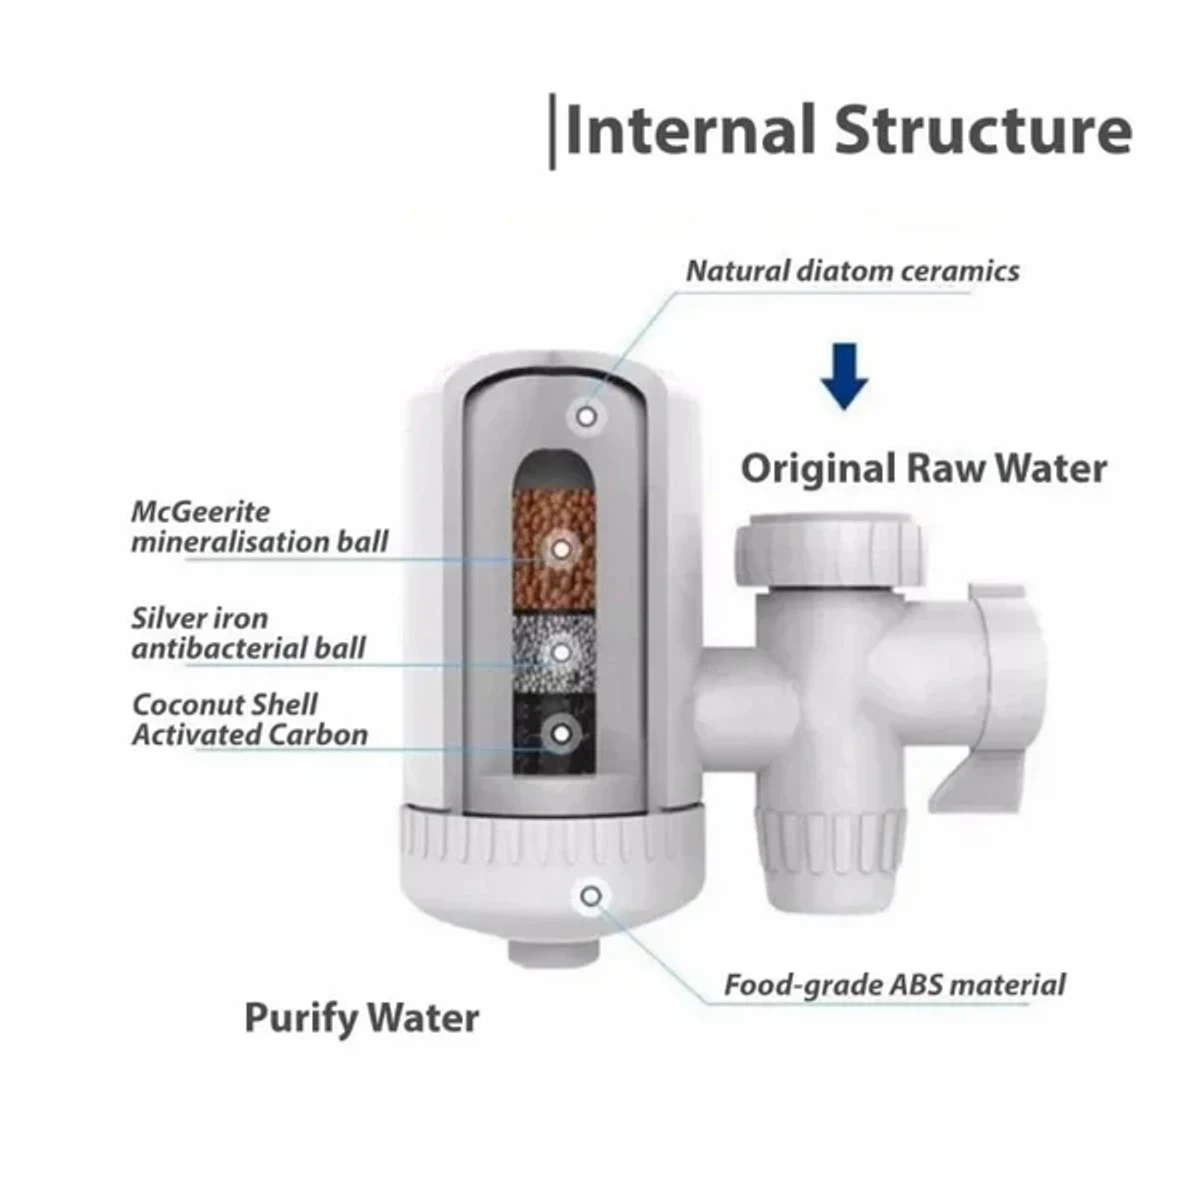 SWS Mini Water Purifier